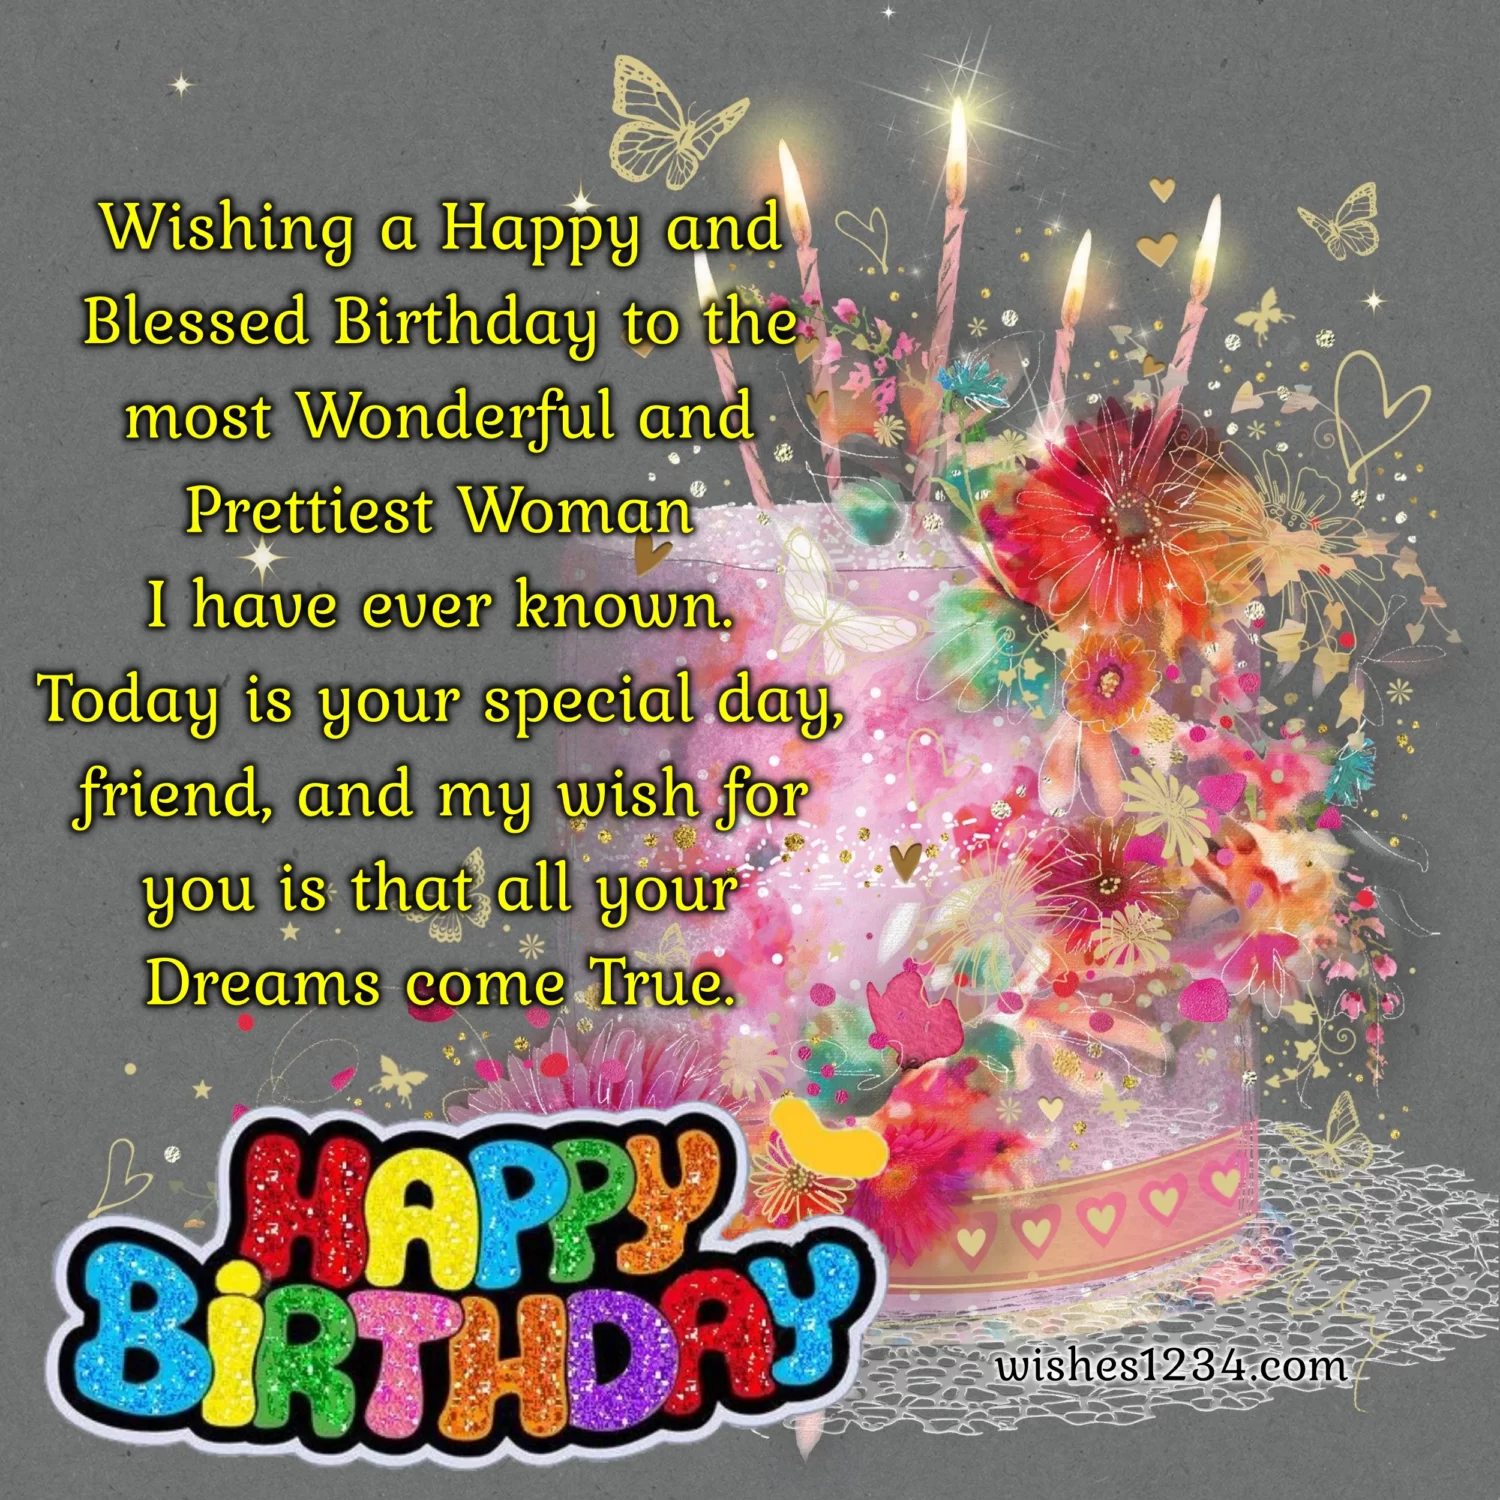 Happy birthday to a lady friend, Happy Birthday wishes for friend girl.